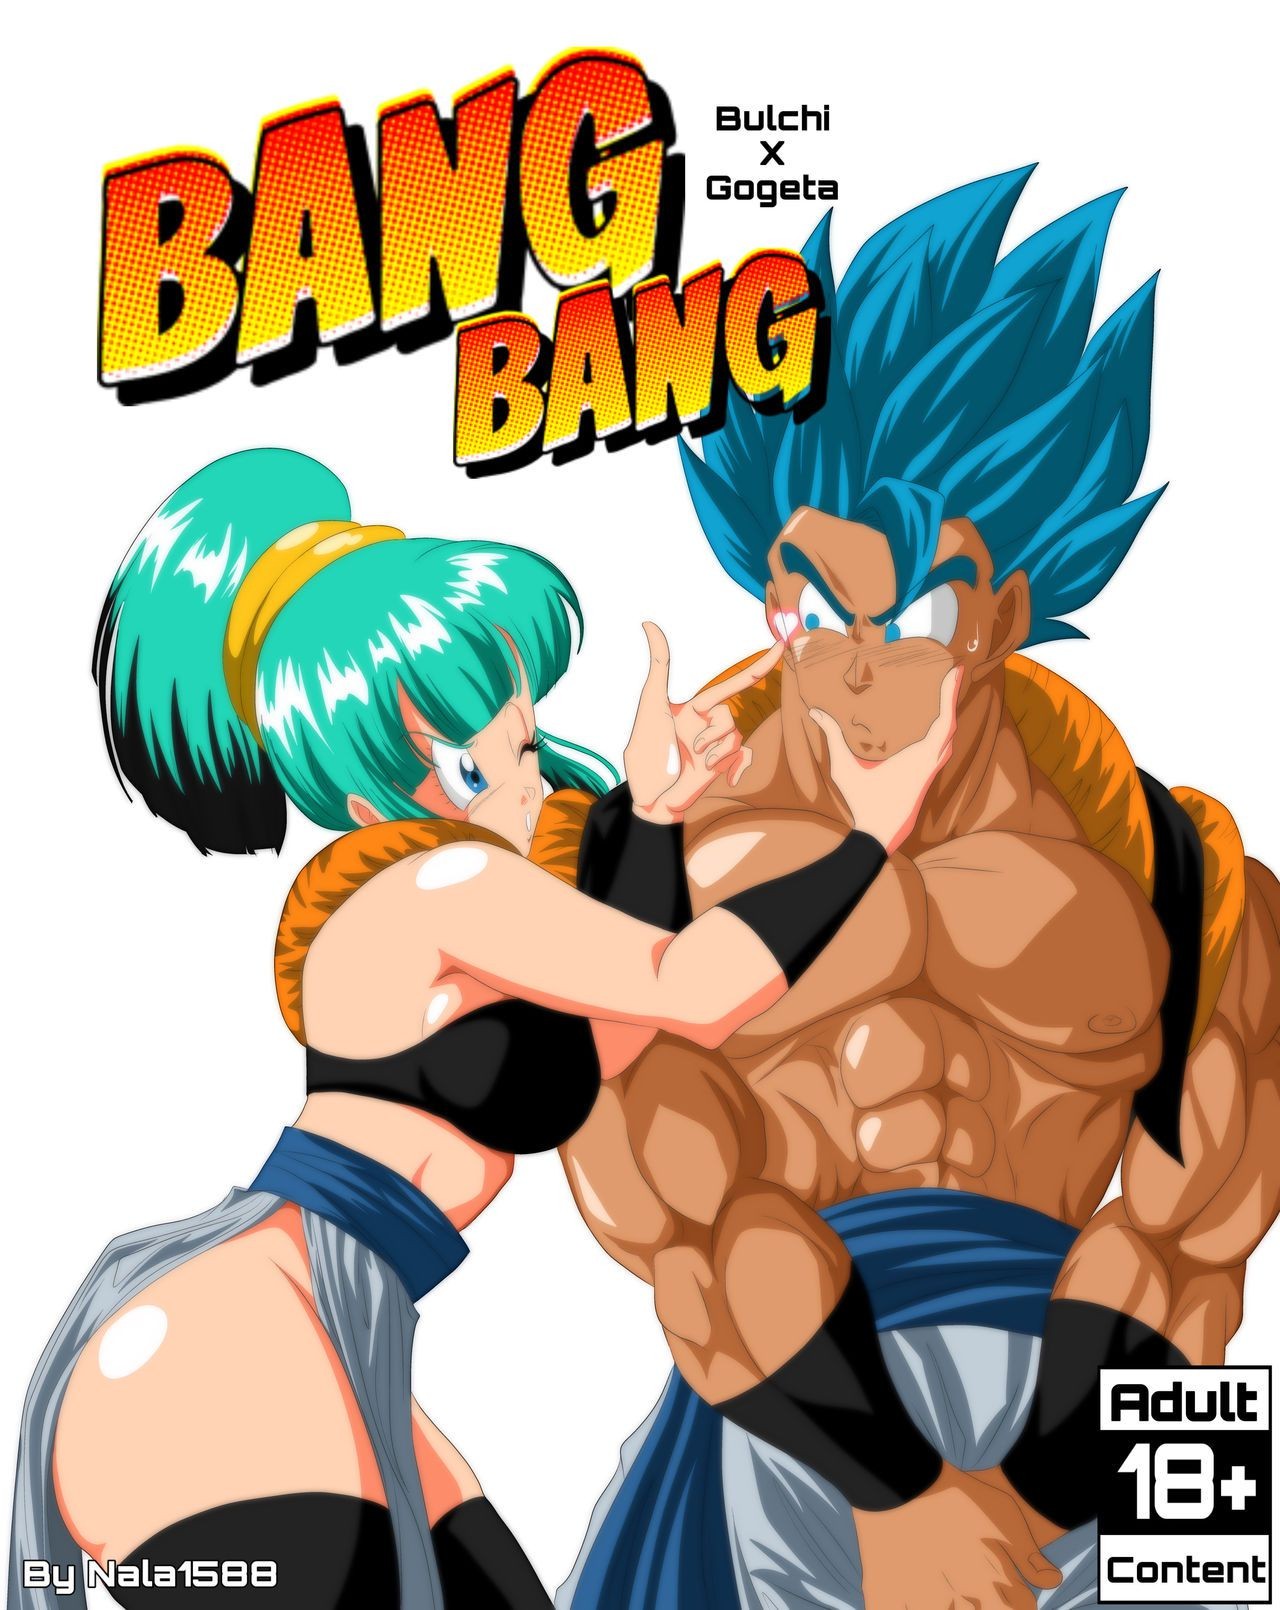 Freeporn [Nala1588] Bang Bang - Bulchi X Gogeta (Dragon Ball Super) [Español] Twink